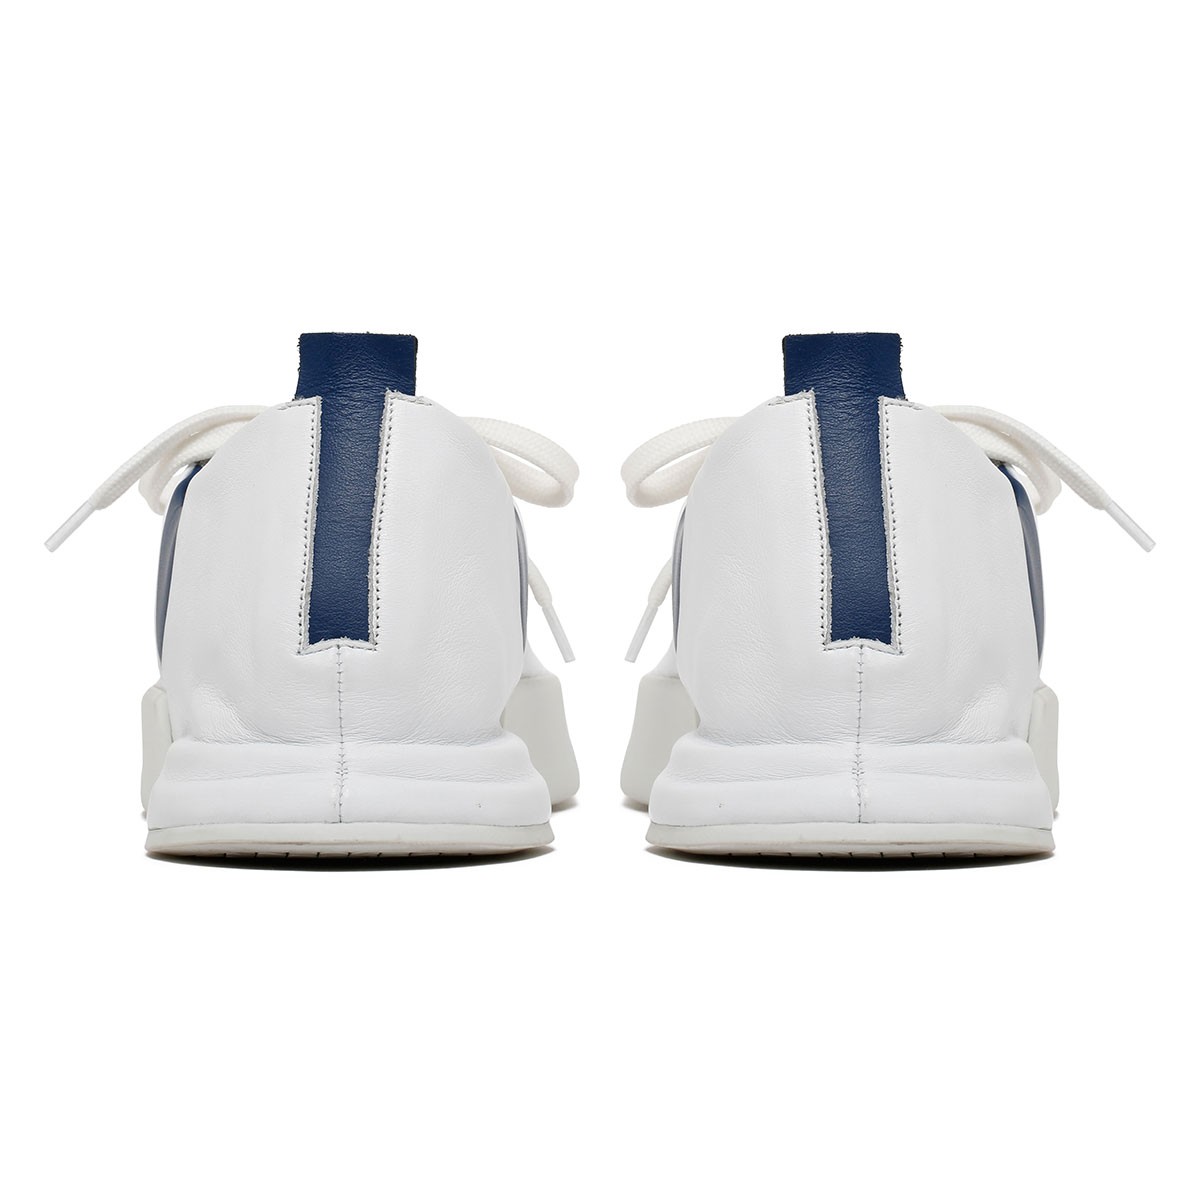 Carosi white and blue sneakers